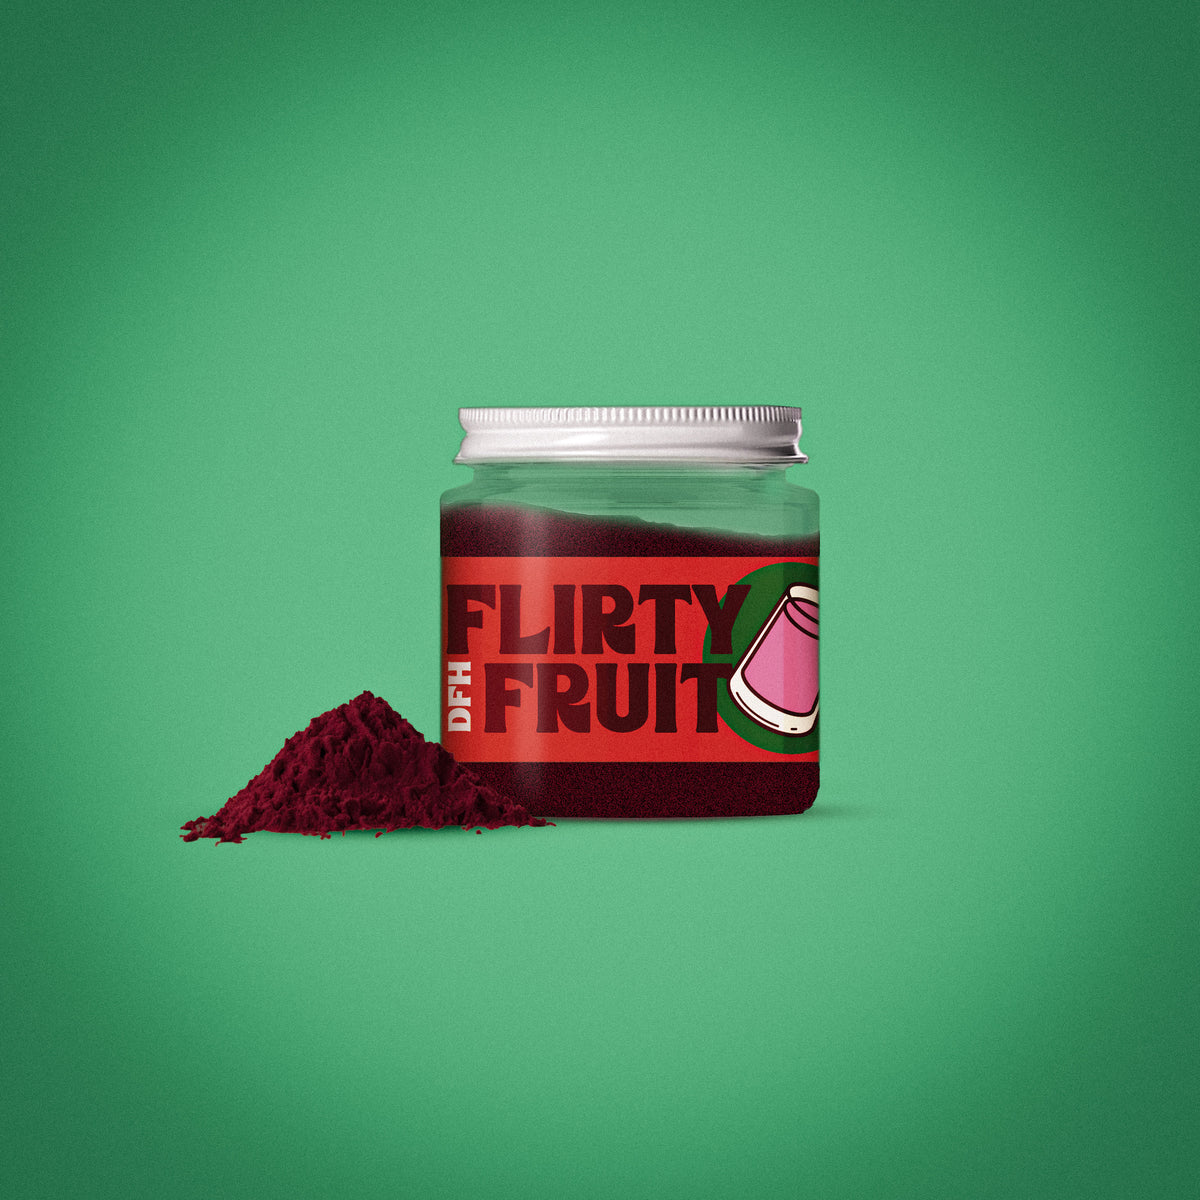 Flirty Fruit Powder